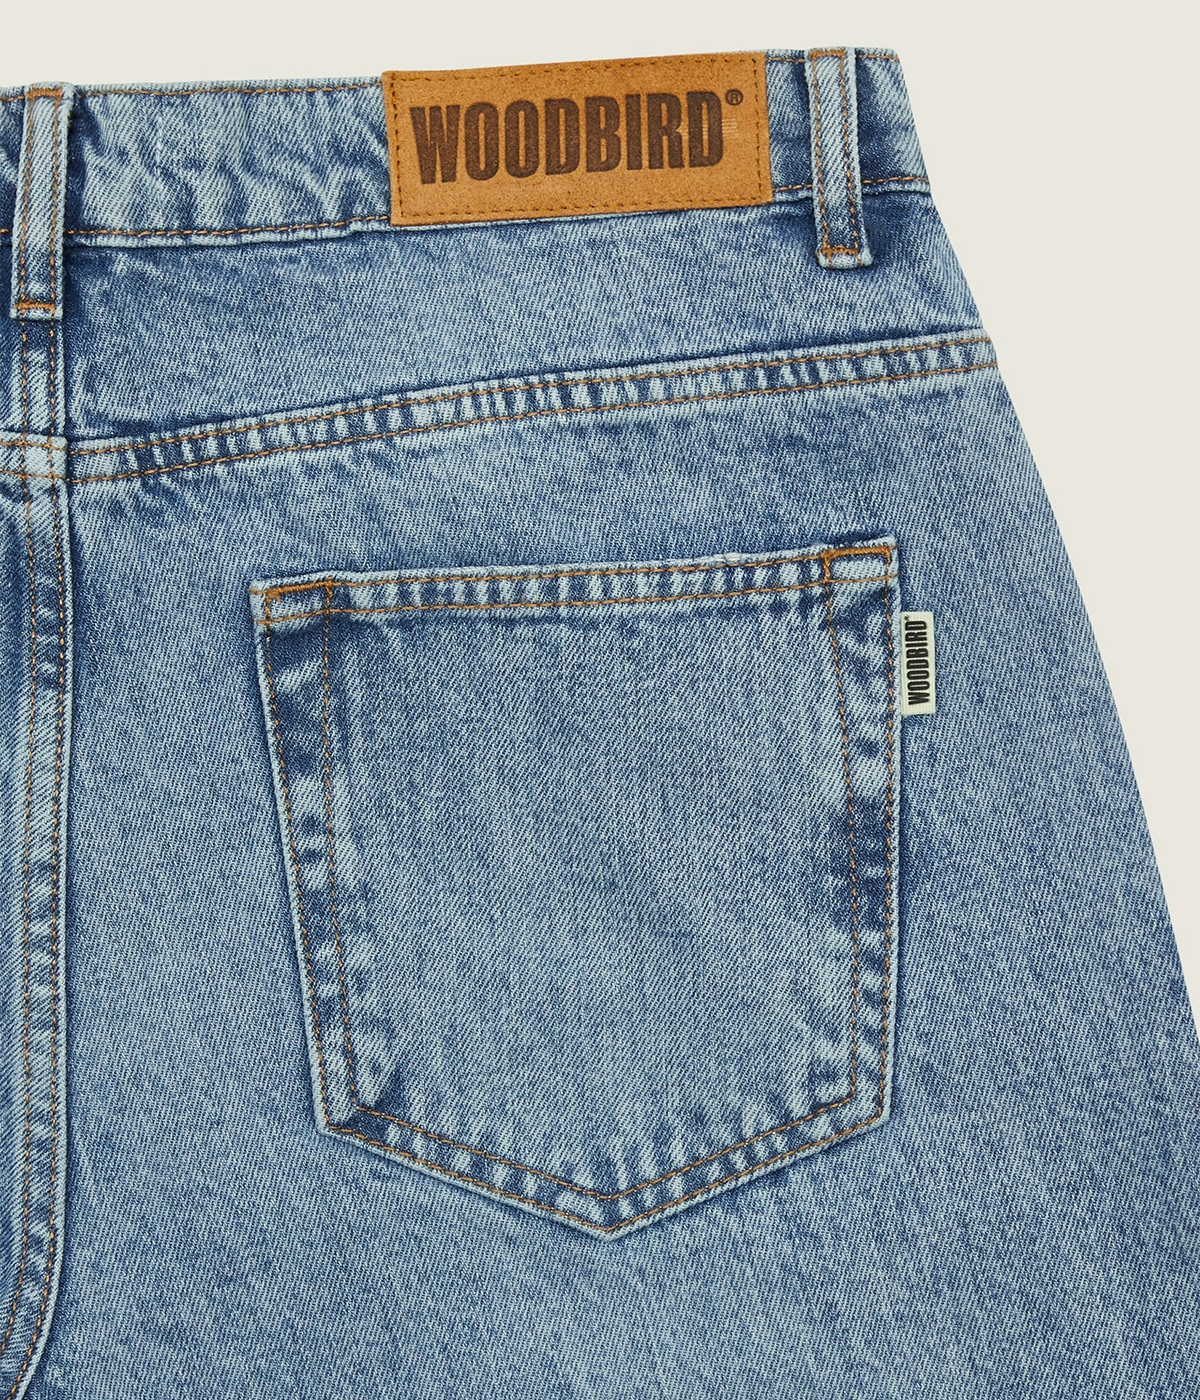 Woodbird Jeans Leroy Doone Washed Blue 3